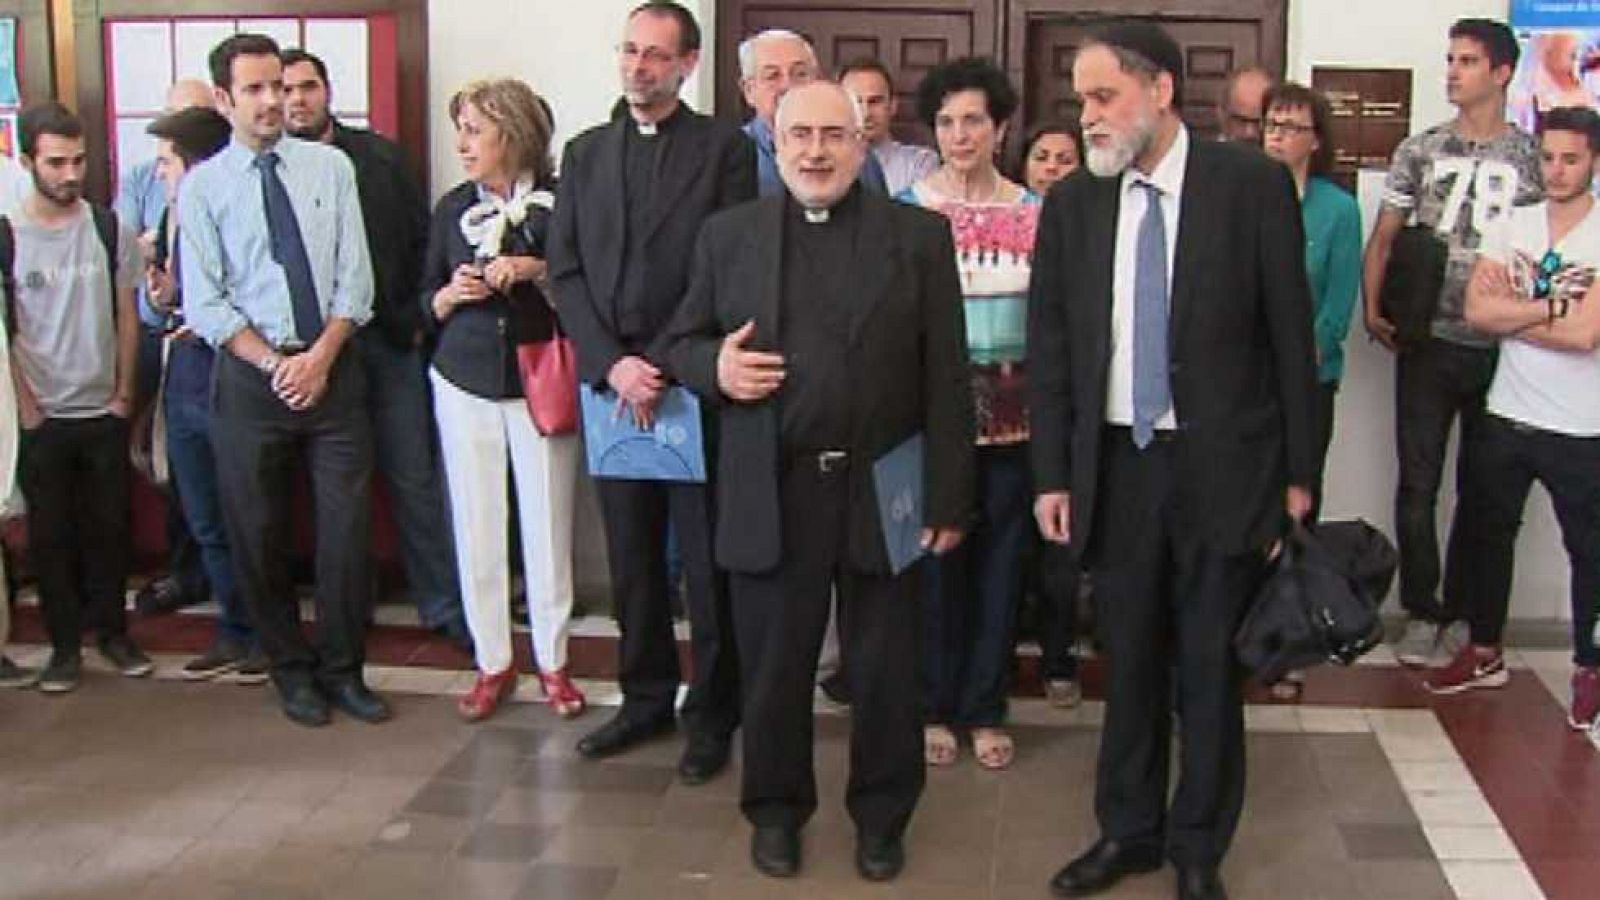 Shalom - Semana de Israel en la Universidad Católica de Murcia